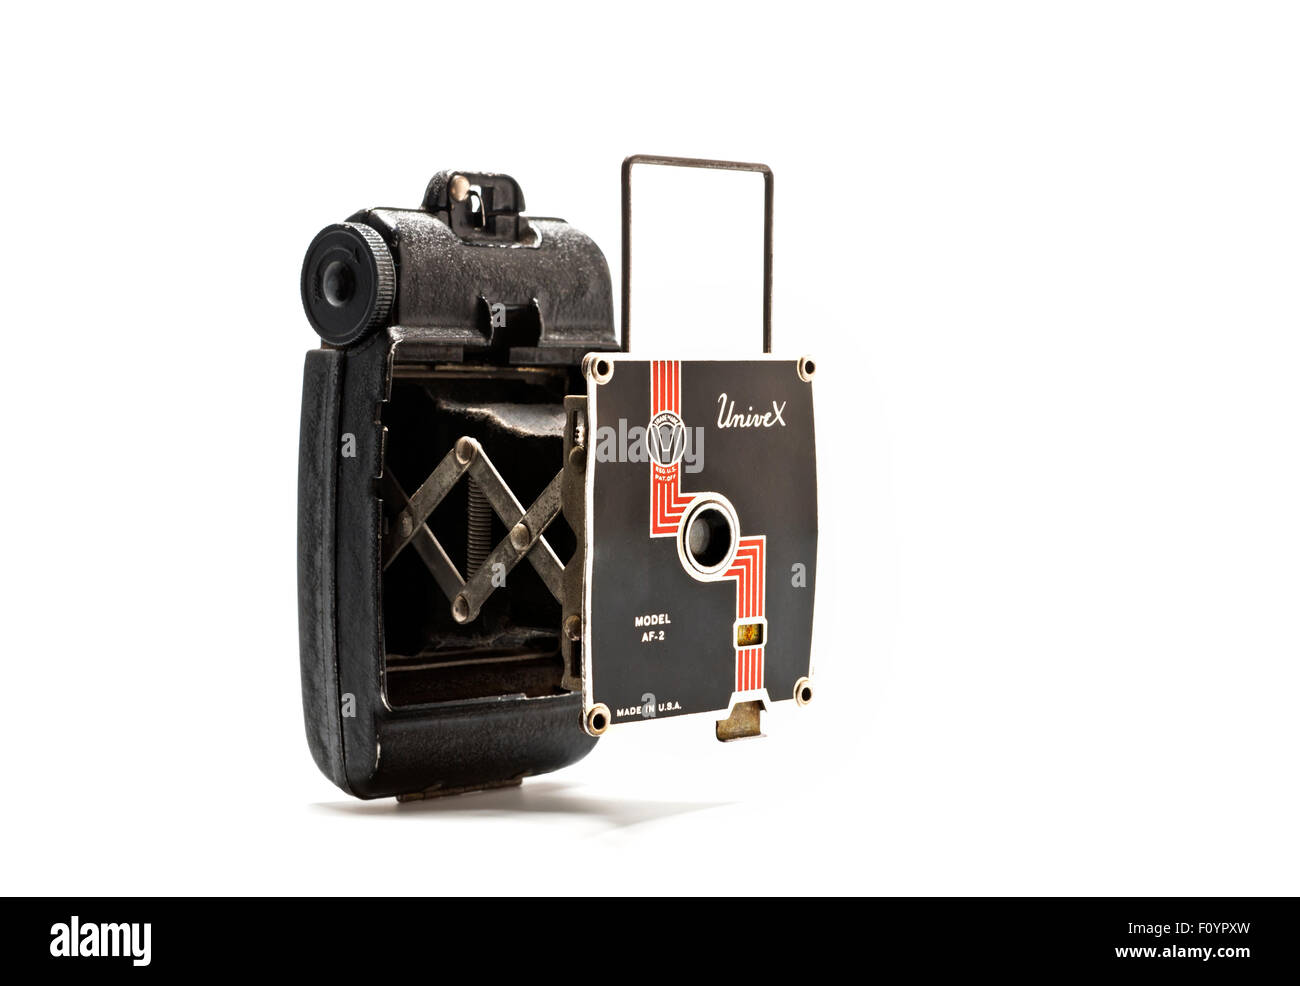 The Univex AF-2 Miniature Film folding spy Camera Stock Photo - Alamy